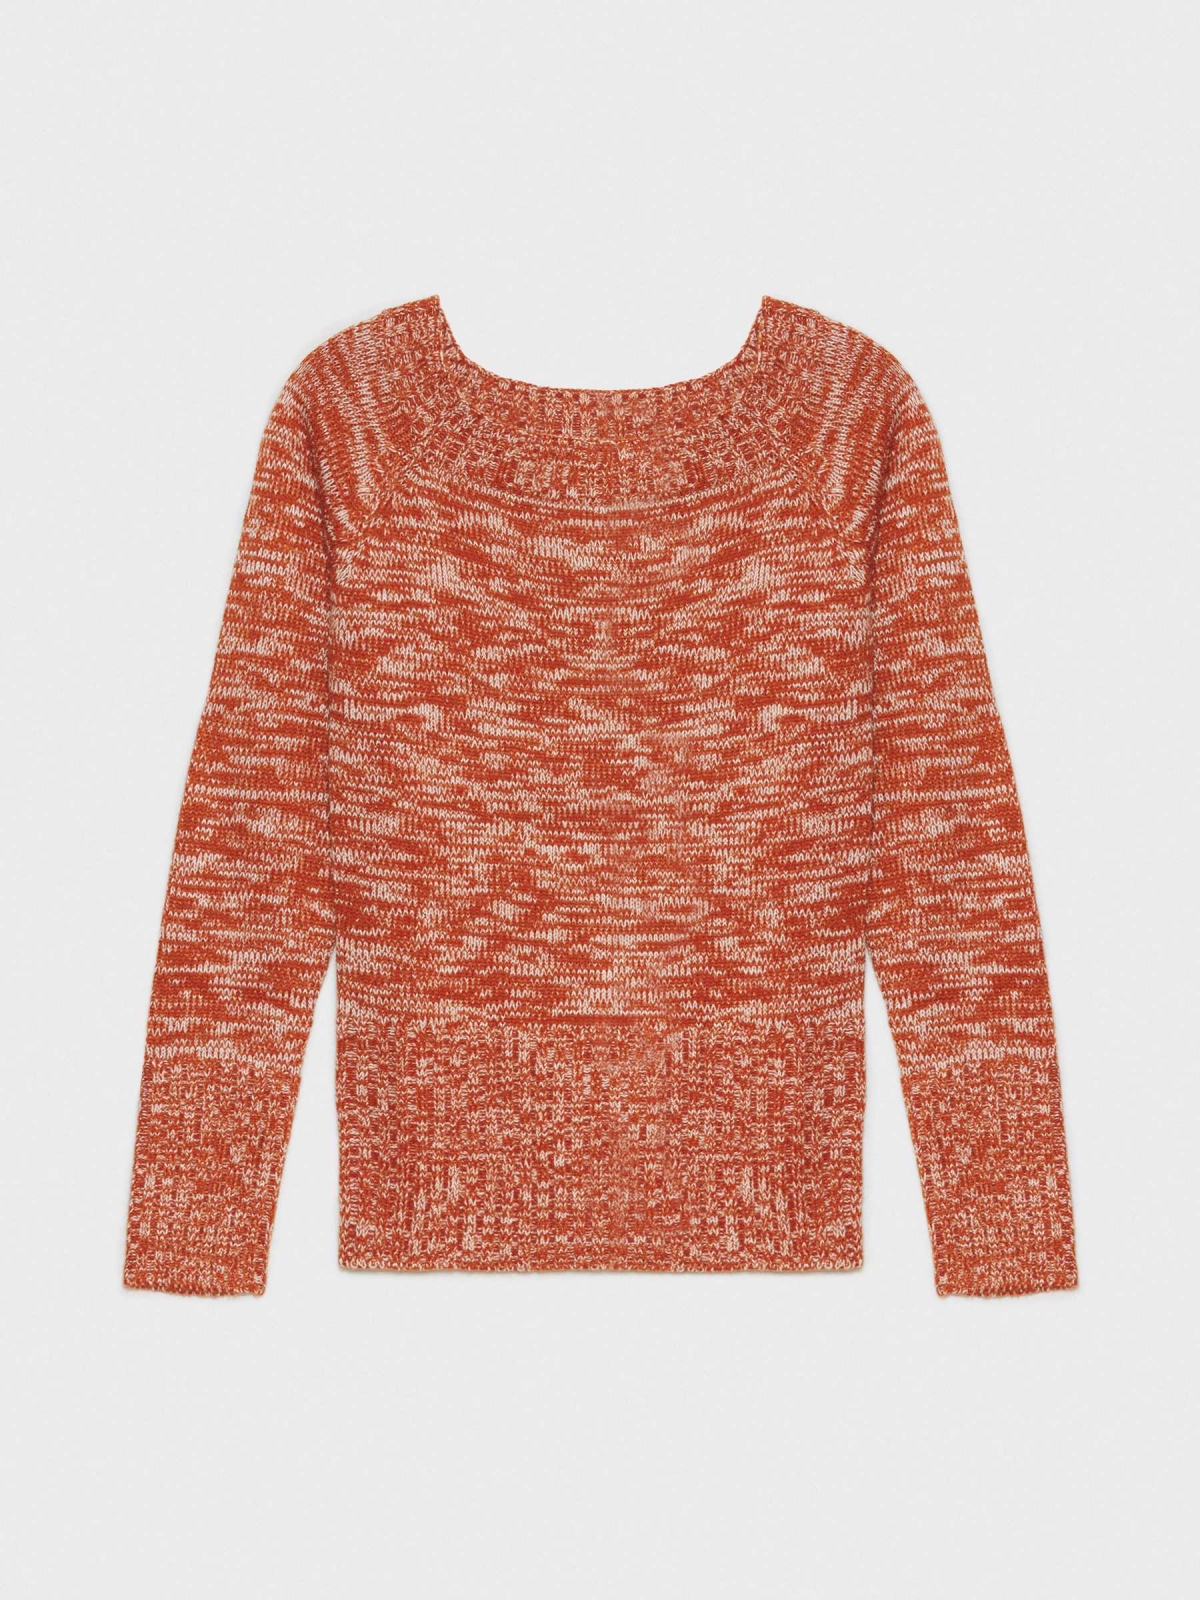  Marbled boat sweater orange